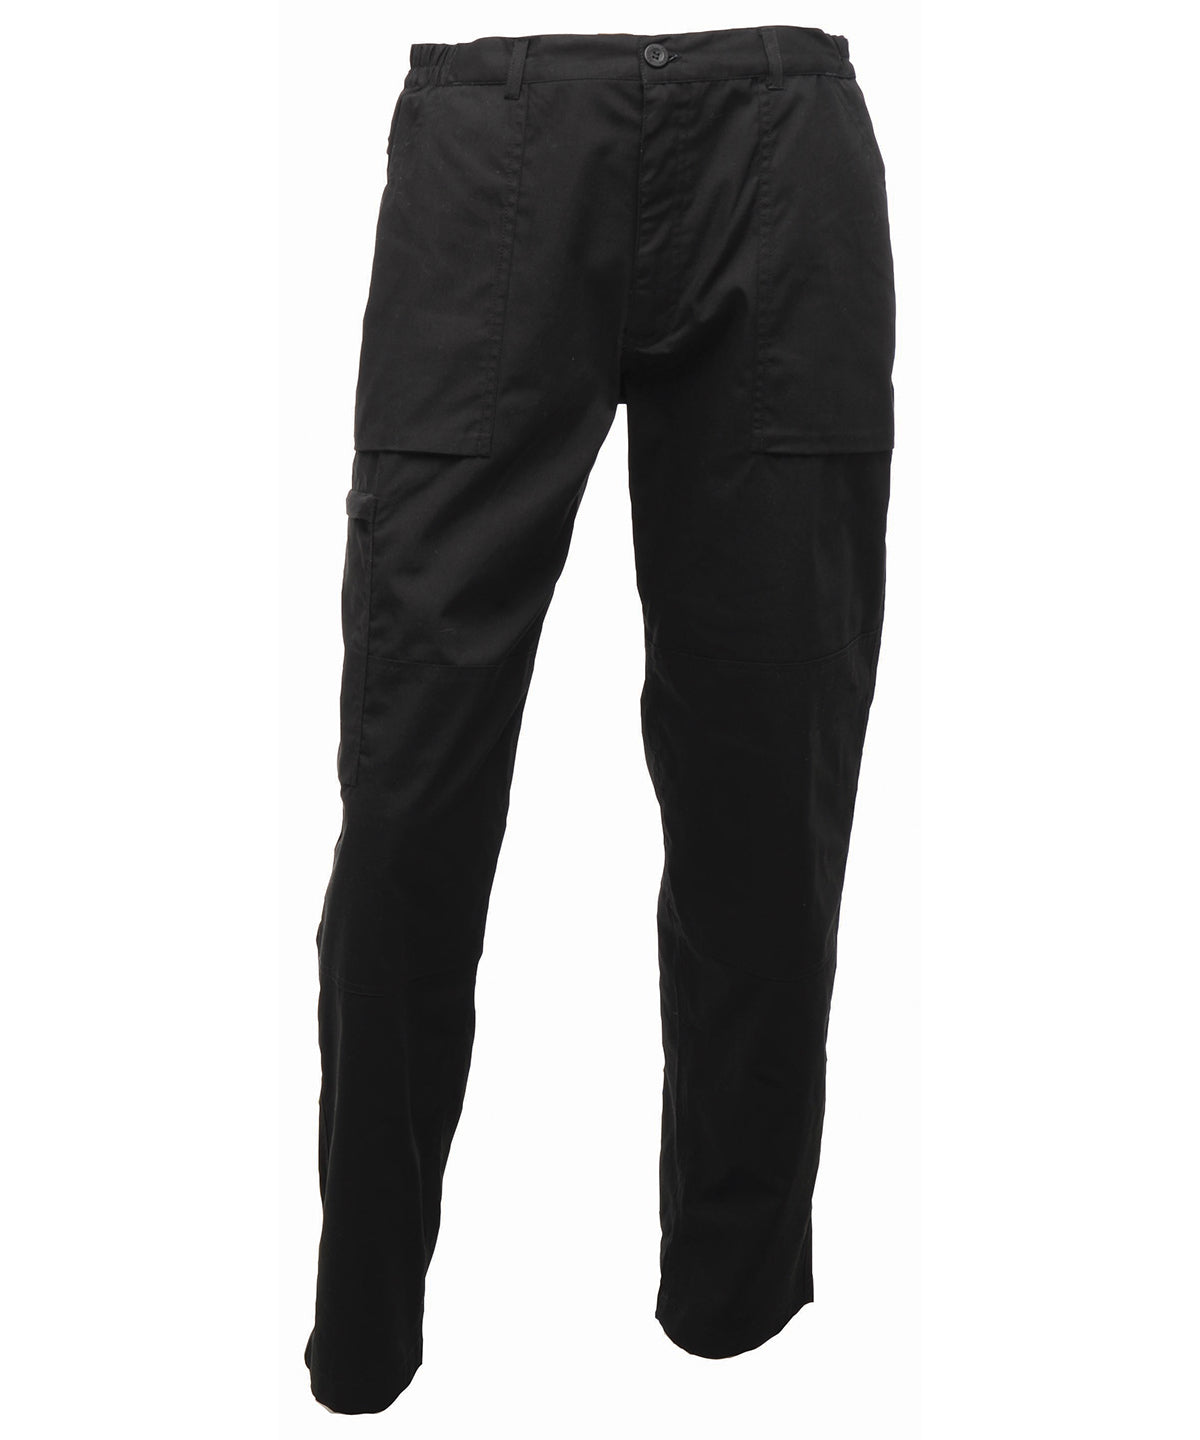 Regatta New action trousers Black